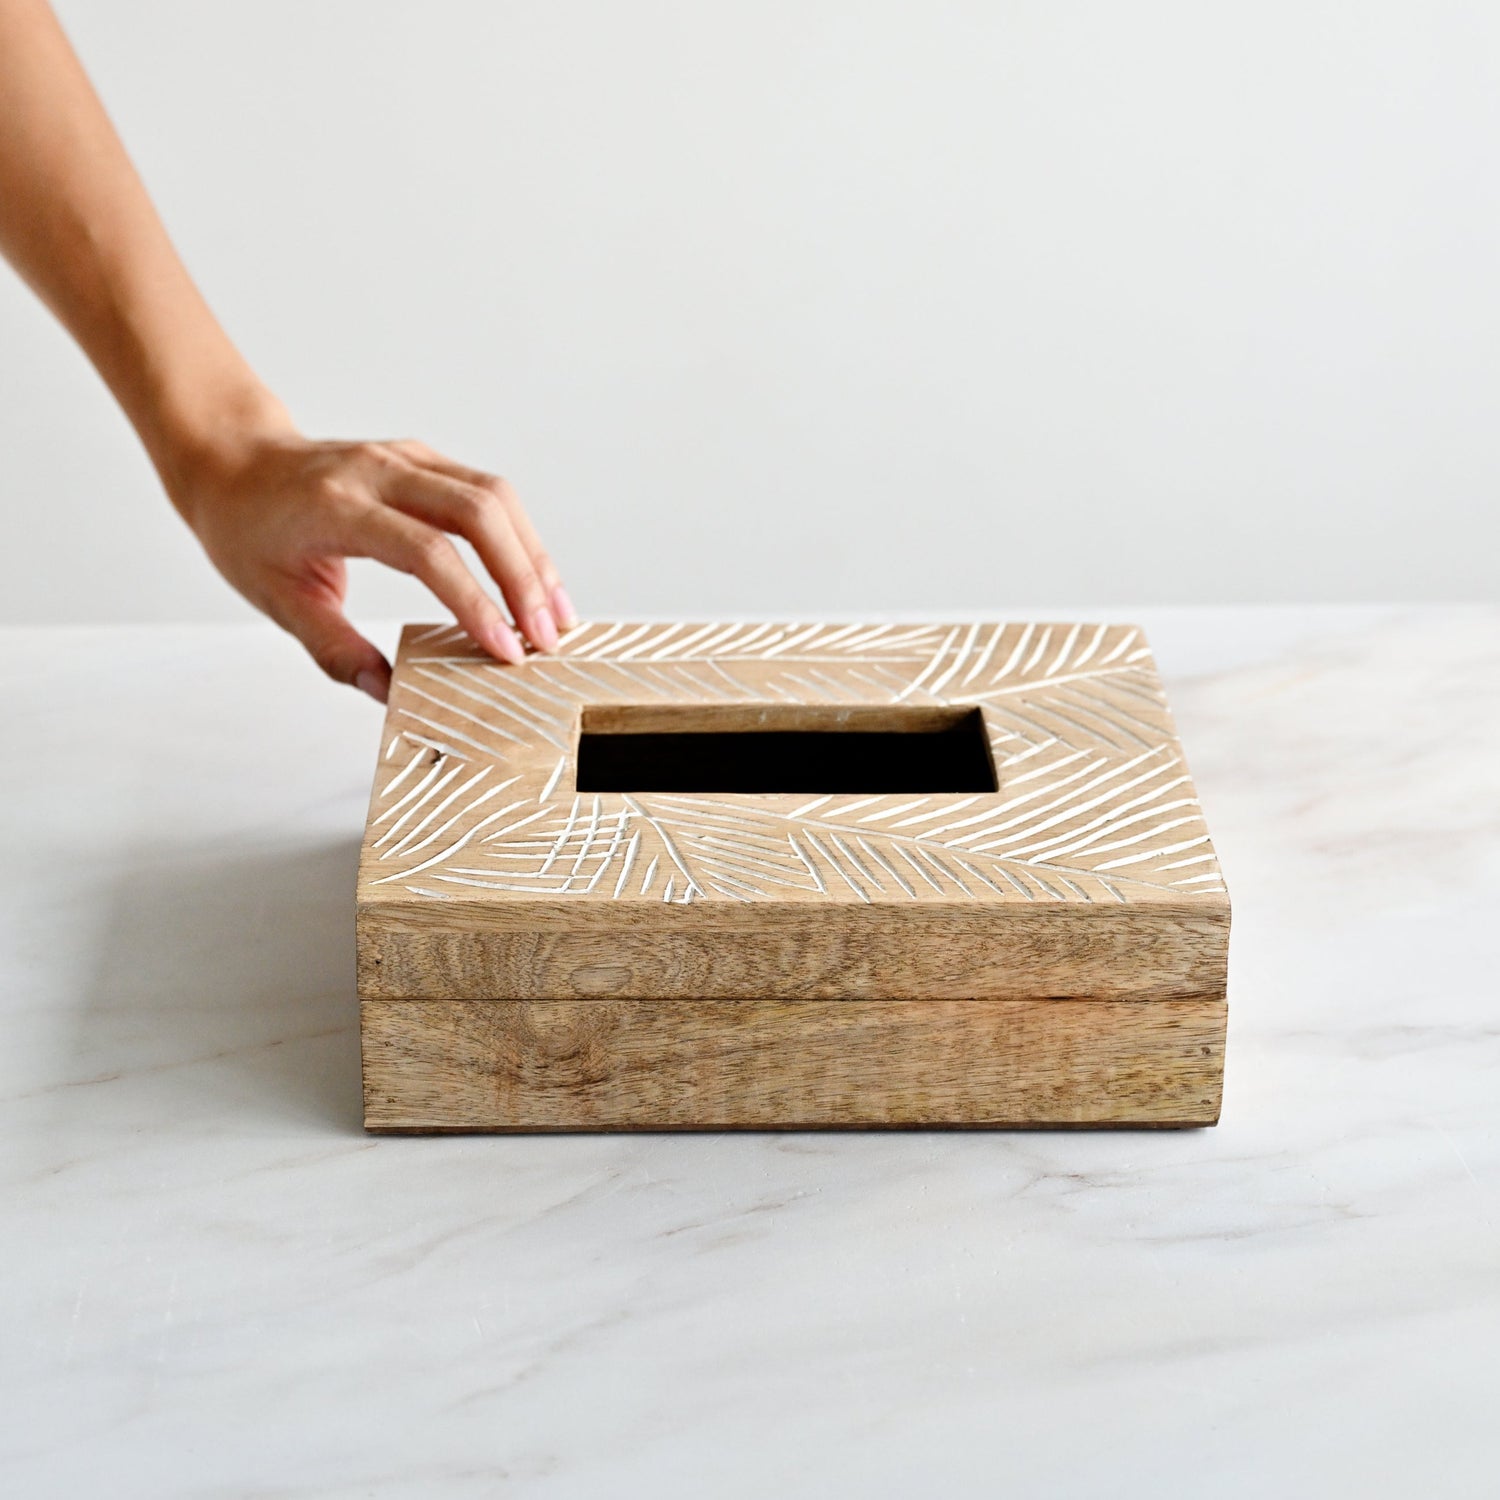 Wooden Napkin Box with Fern Patterns